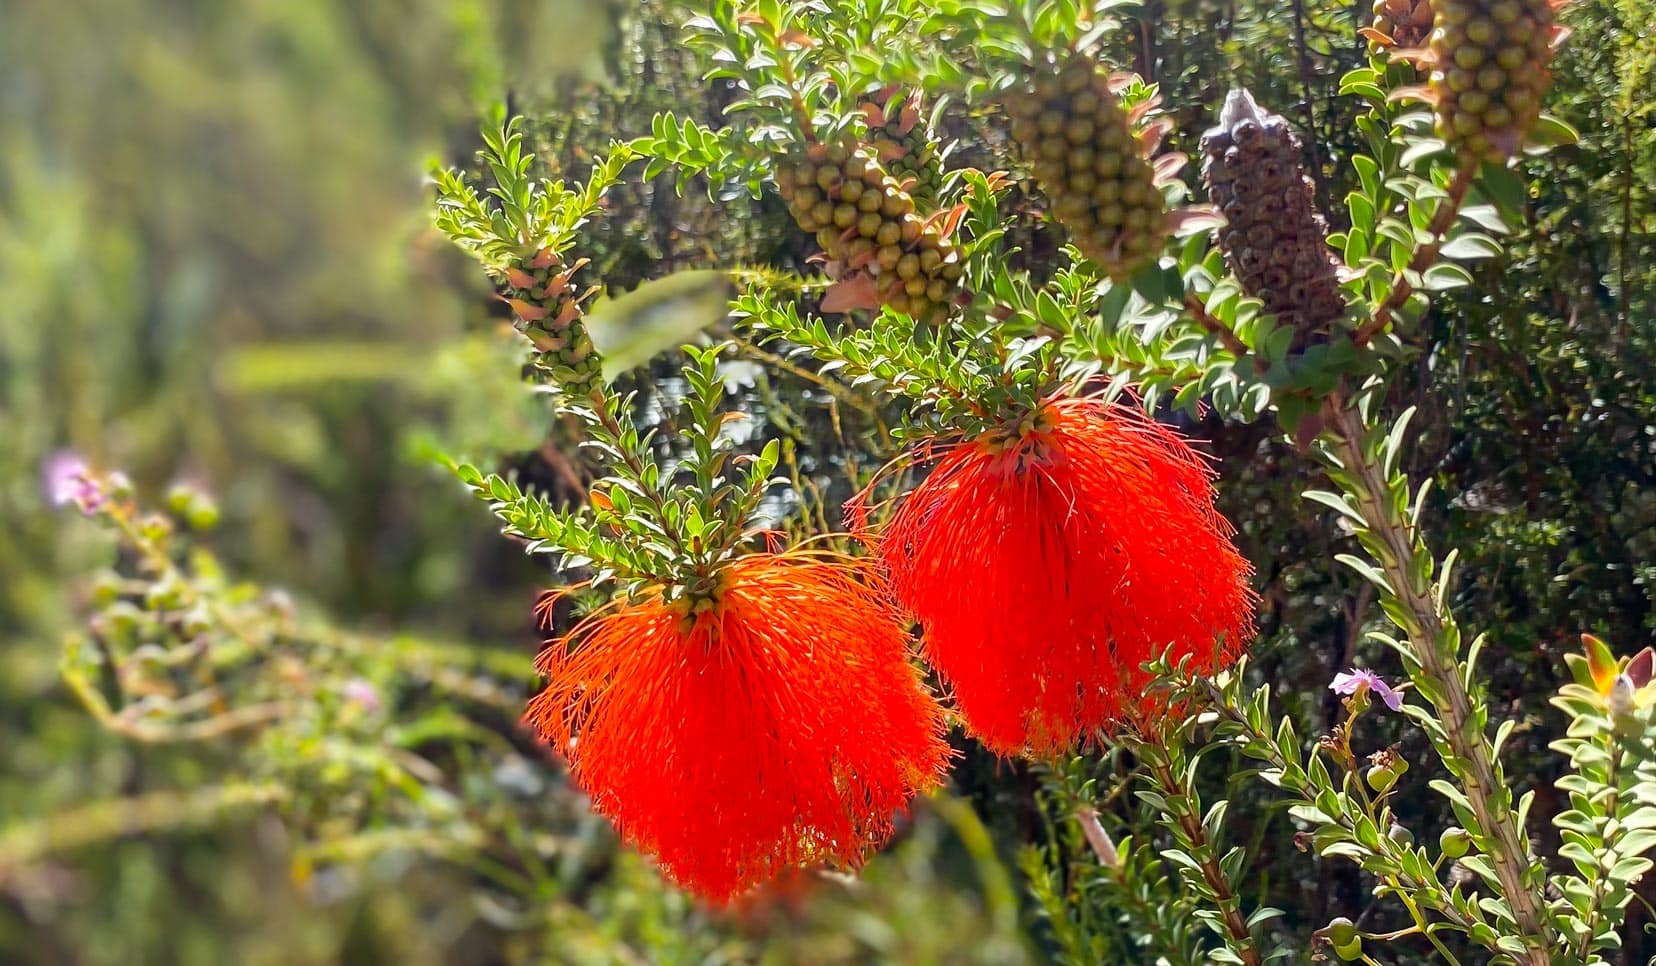 The bright red flowers of the Swamp Bottlebrush